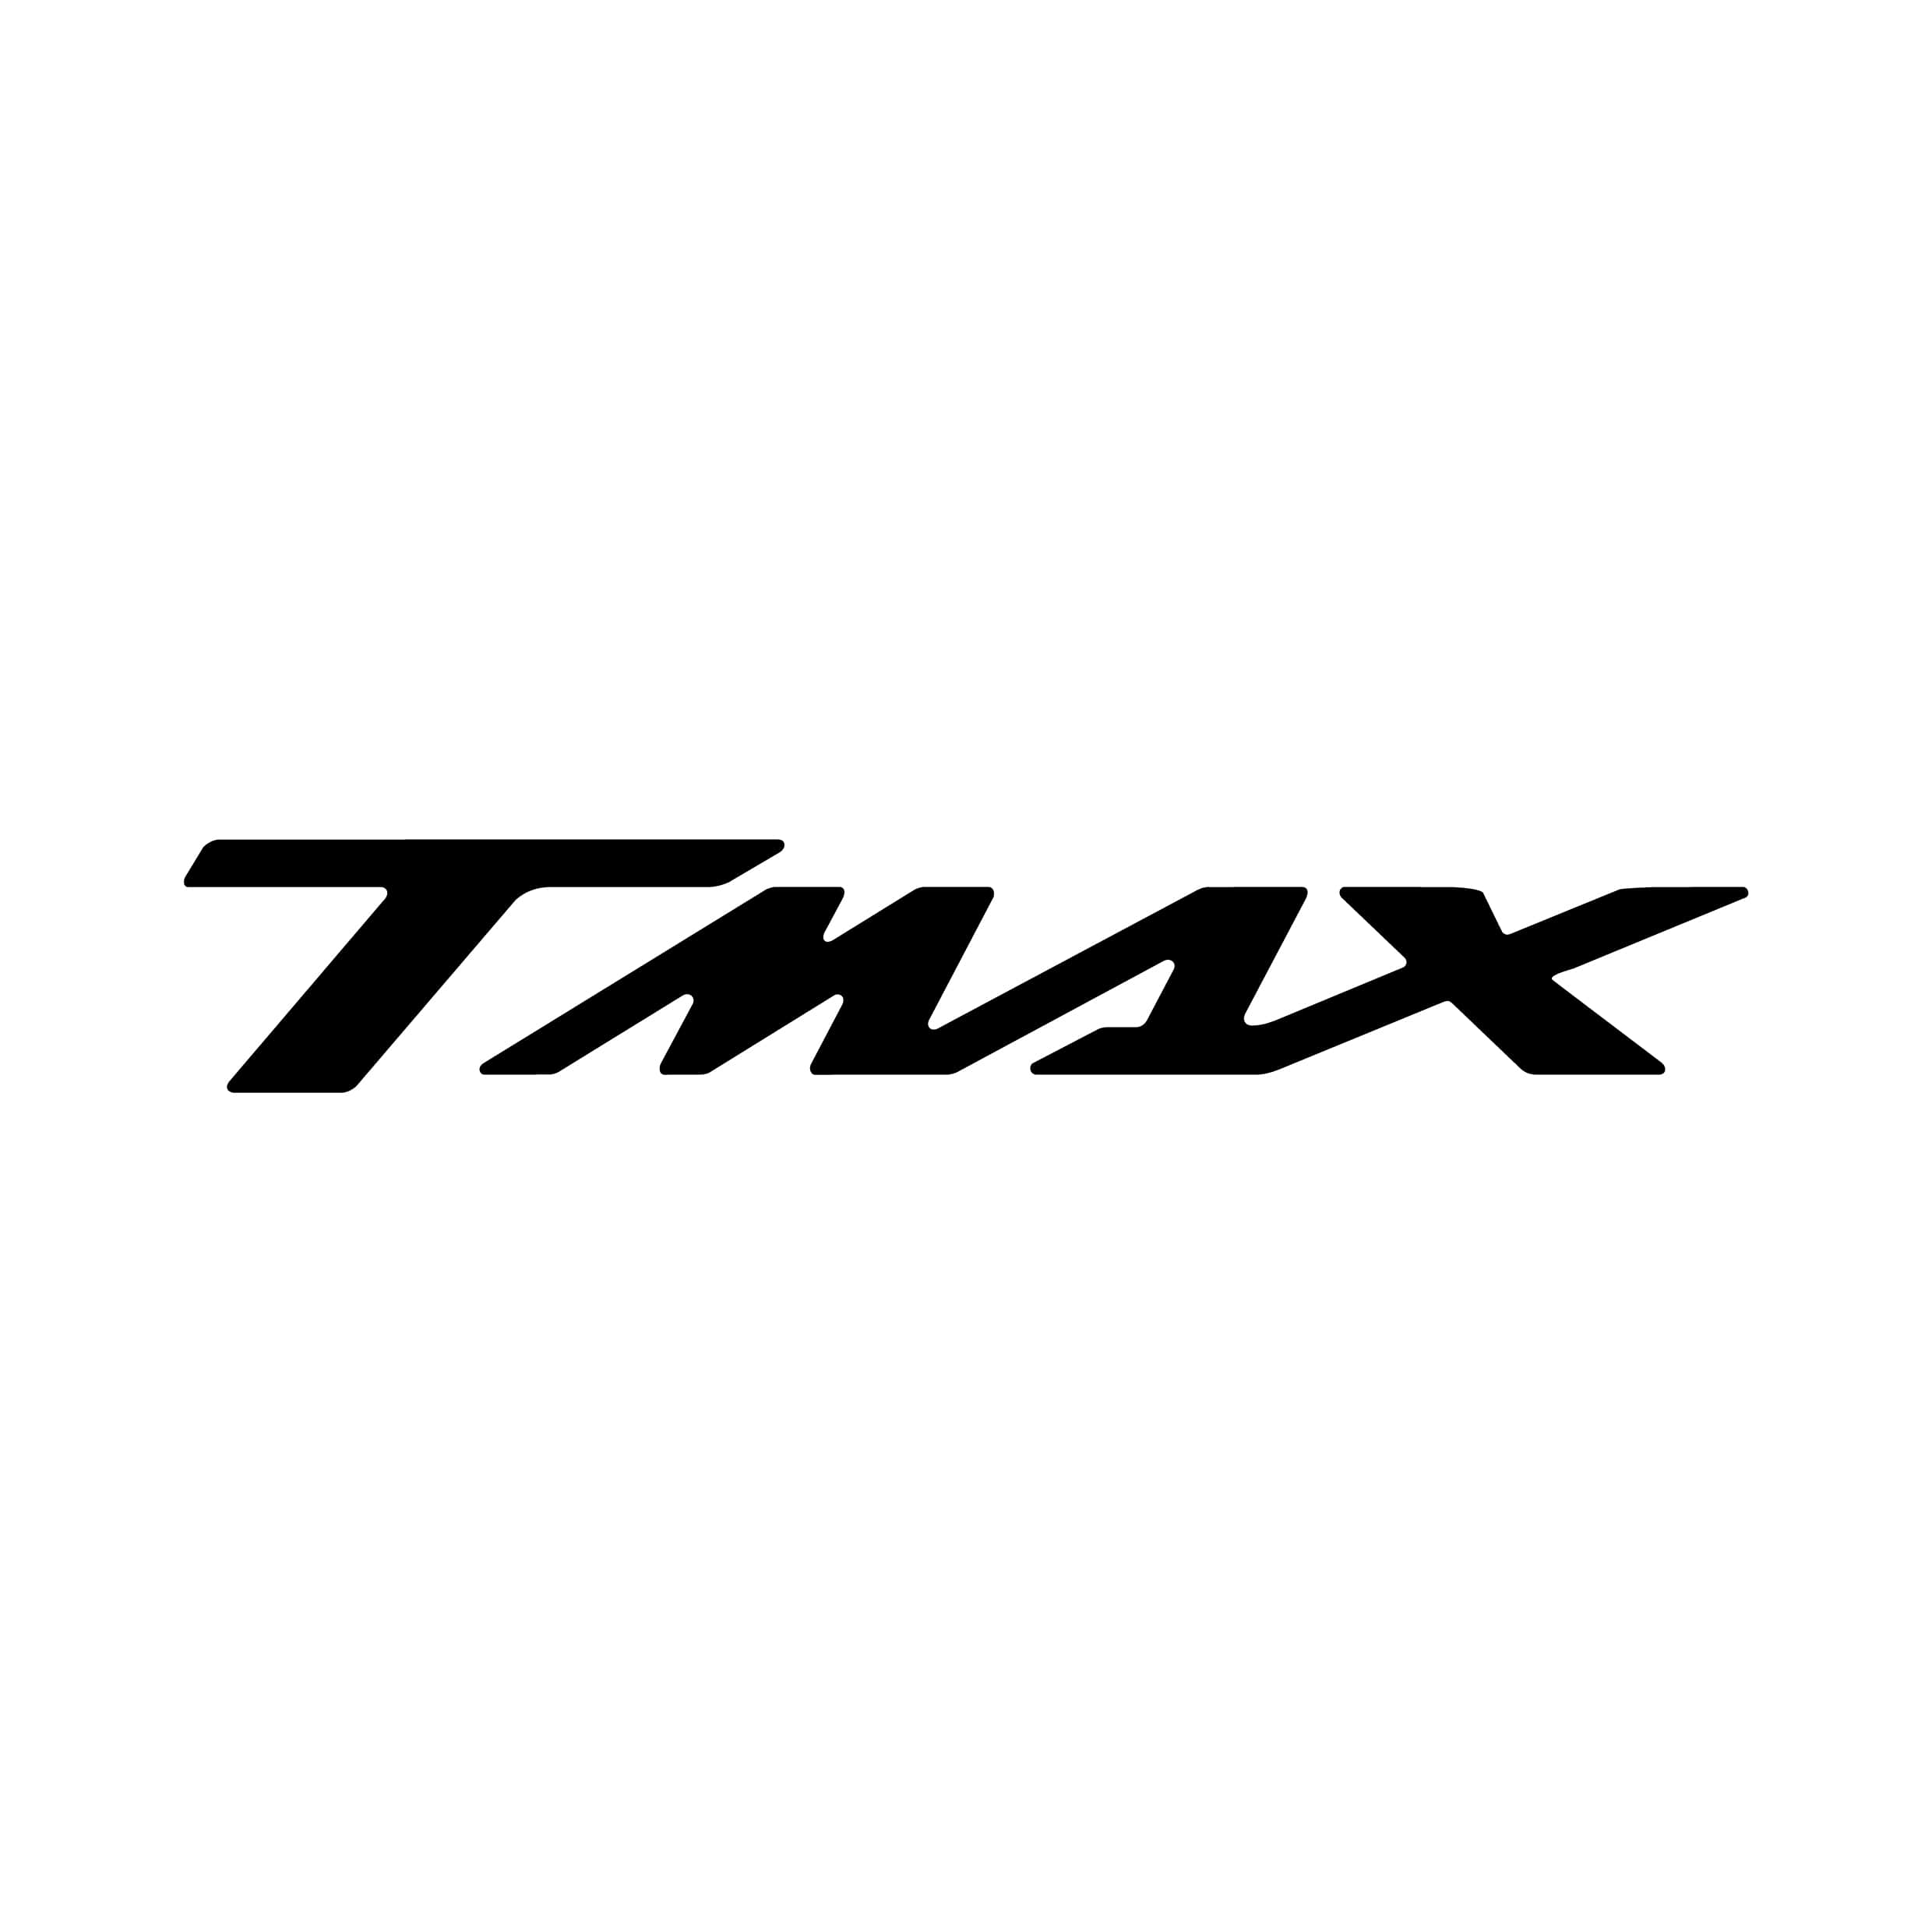 stickers-tmax-yamaha-ref66-autocollant-moto-sticker-deux-roue-autocollants-decals-sponsors-tuning-sport-logo-bike-scooter-min